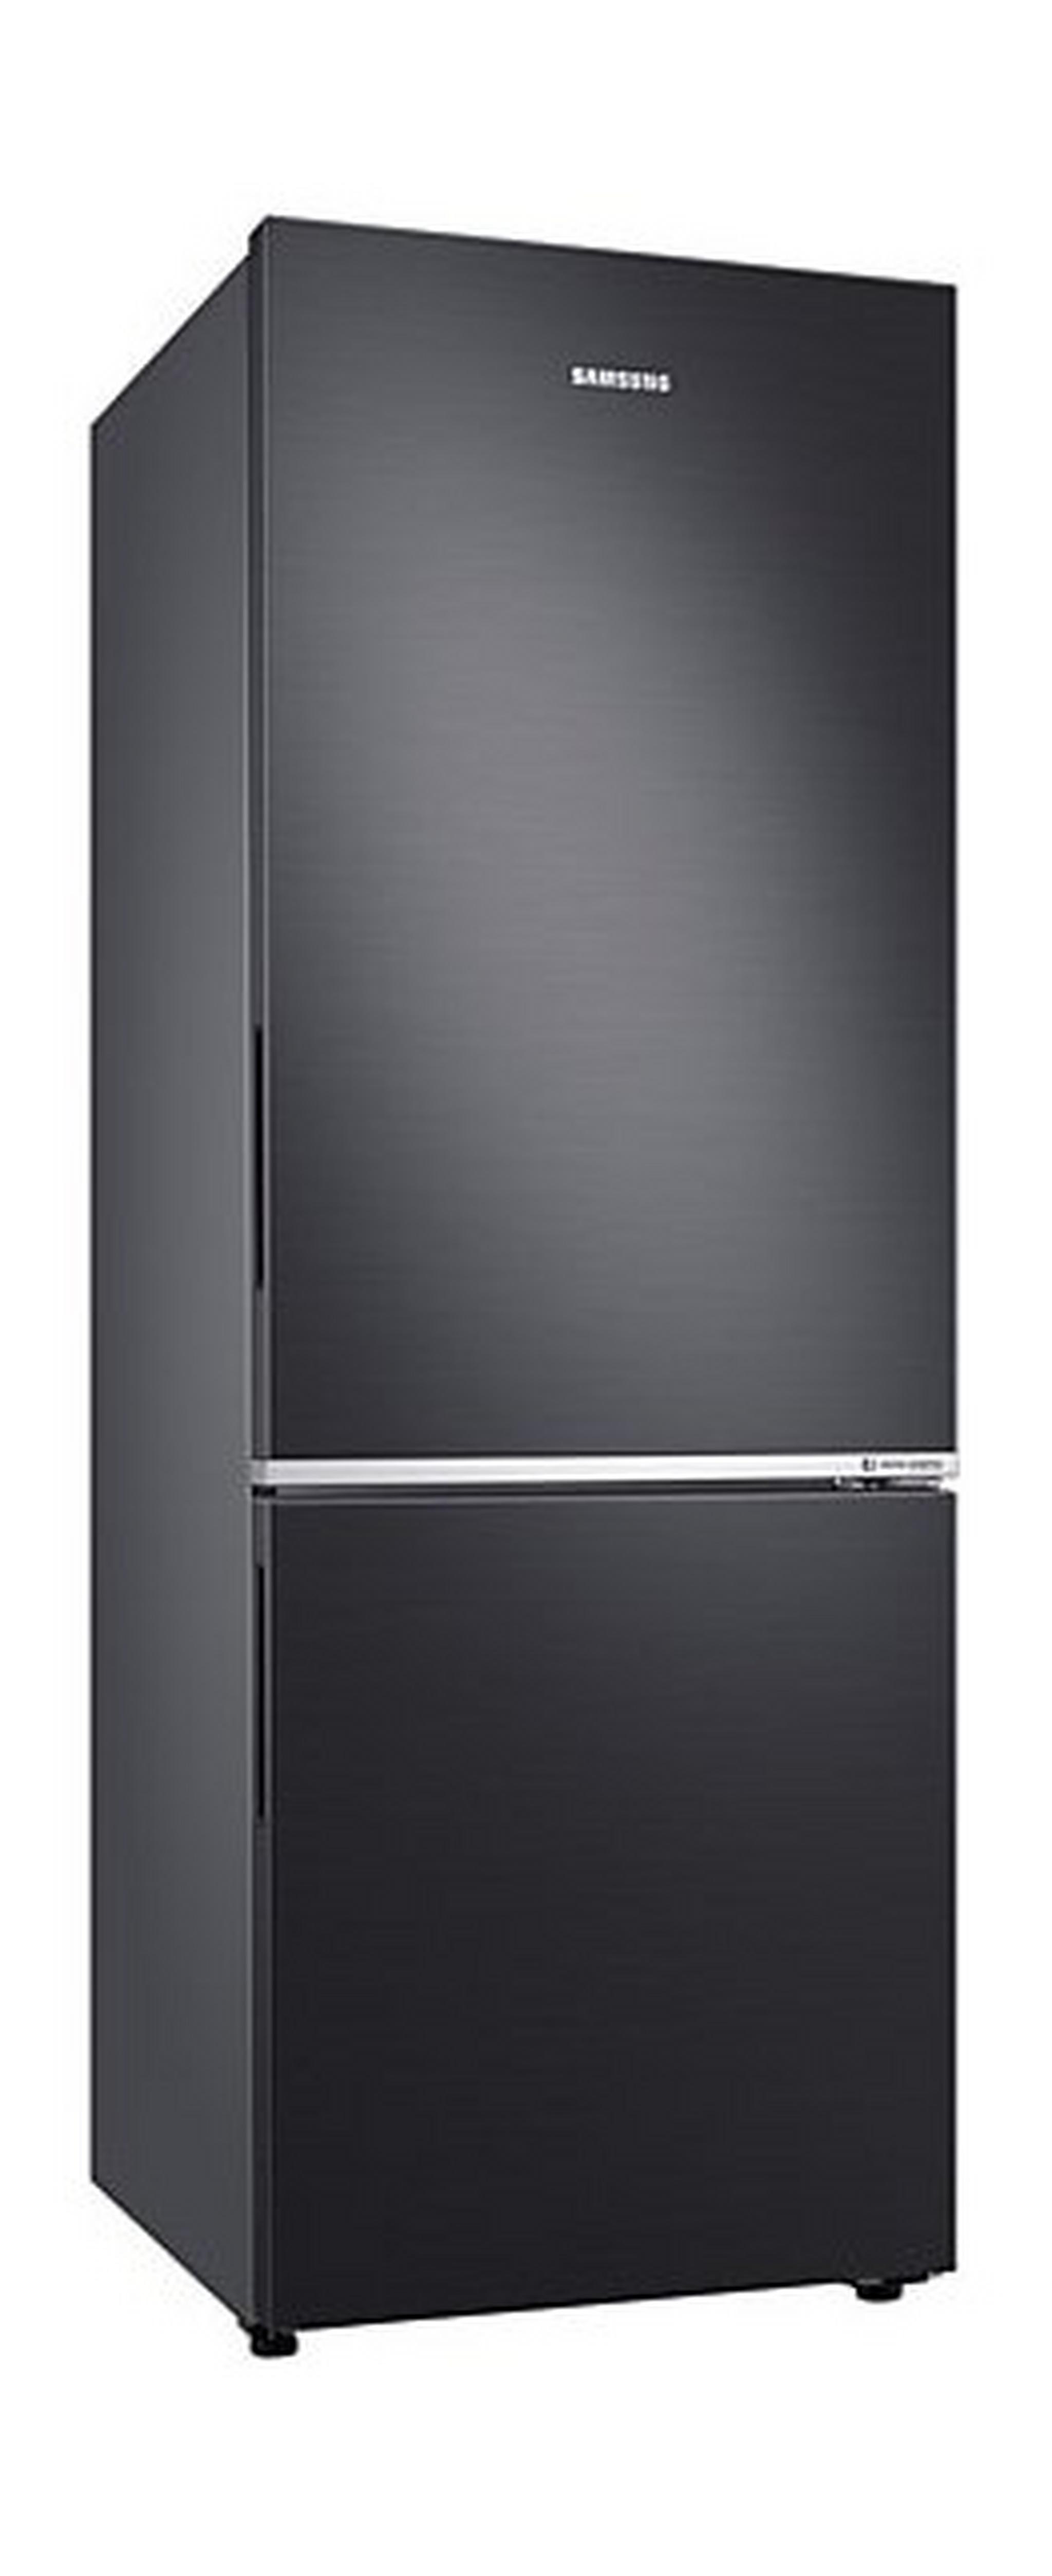 Samsung 11 CFT Bottom Mount Refrigerator - (RB30N4050B1)